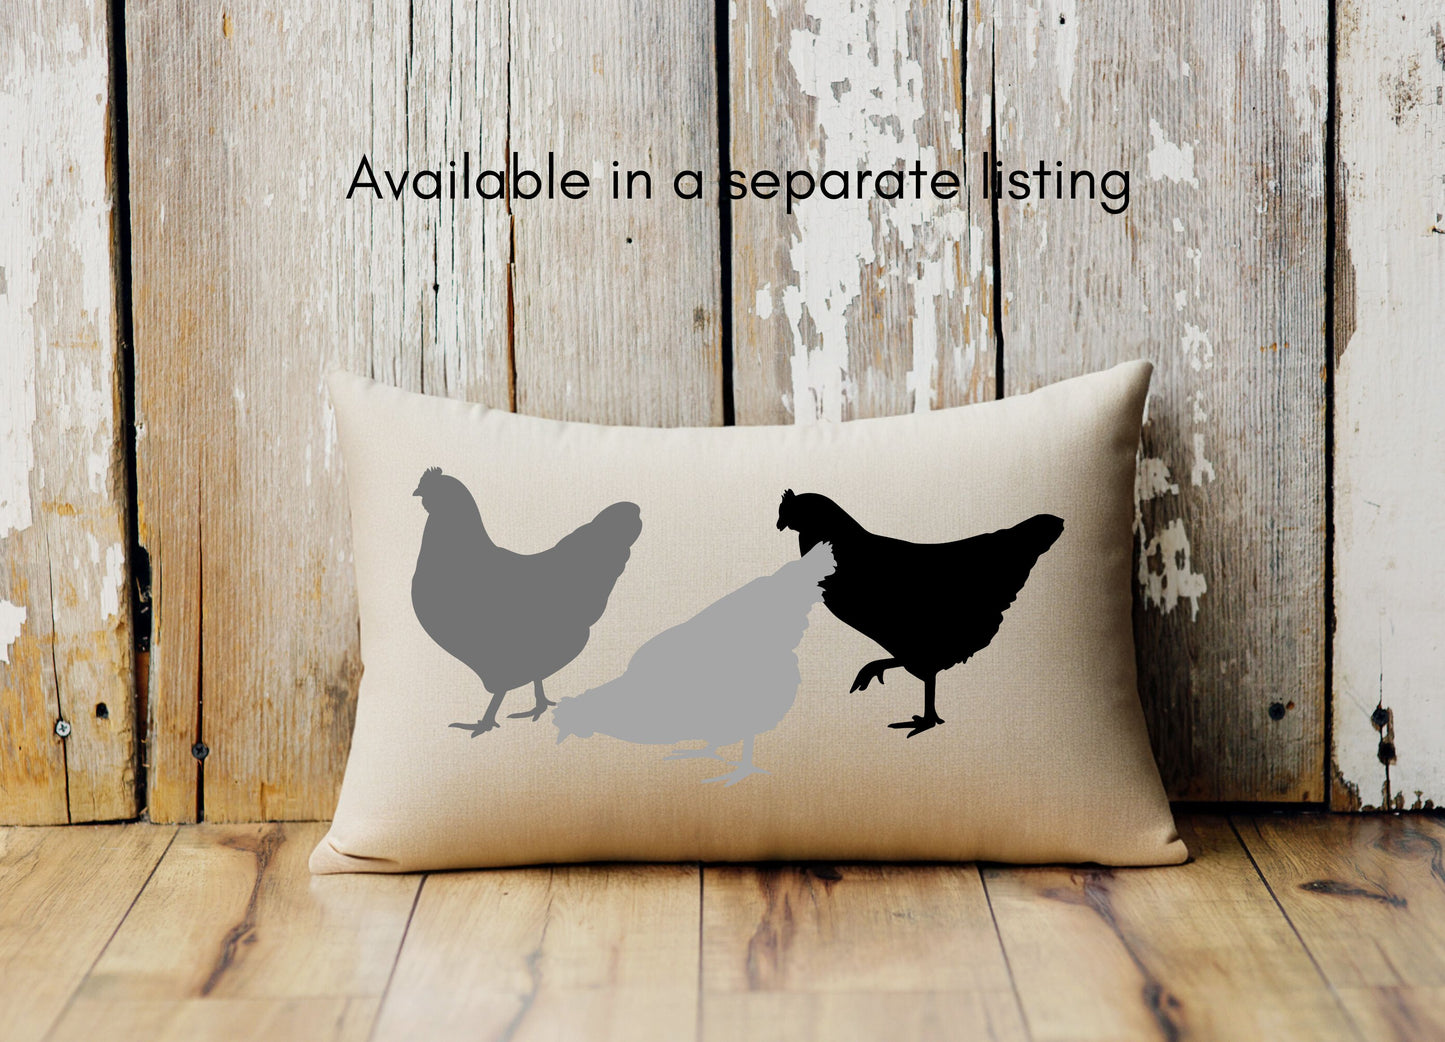 You & Me plus Chickens - Farmhouse Decor Pillow | Chicken Decor | Housewarming Gift | Chicken Lover Gift |Throw Pillow | Square Pillow